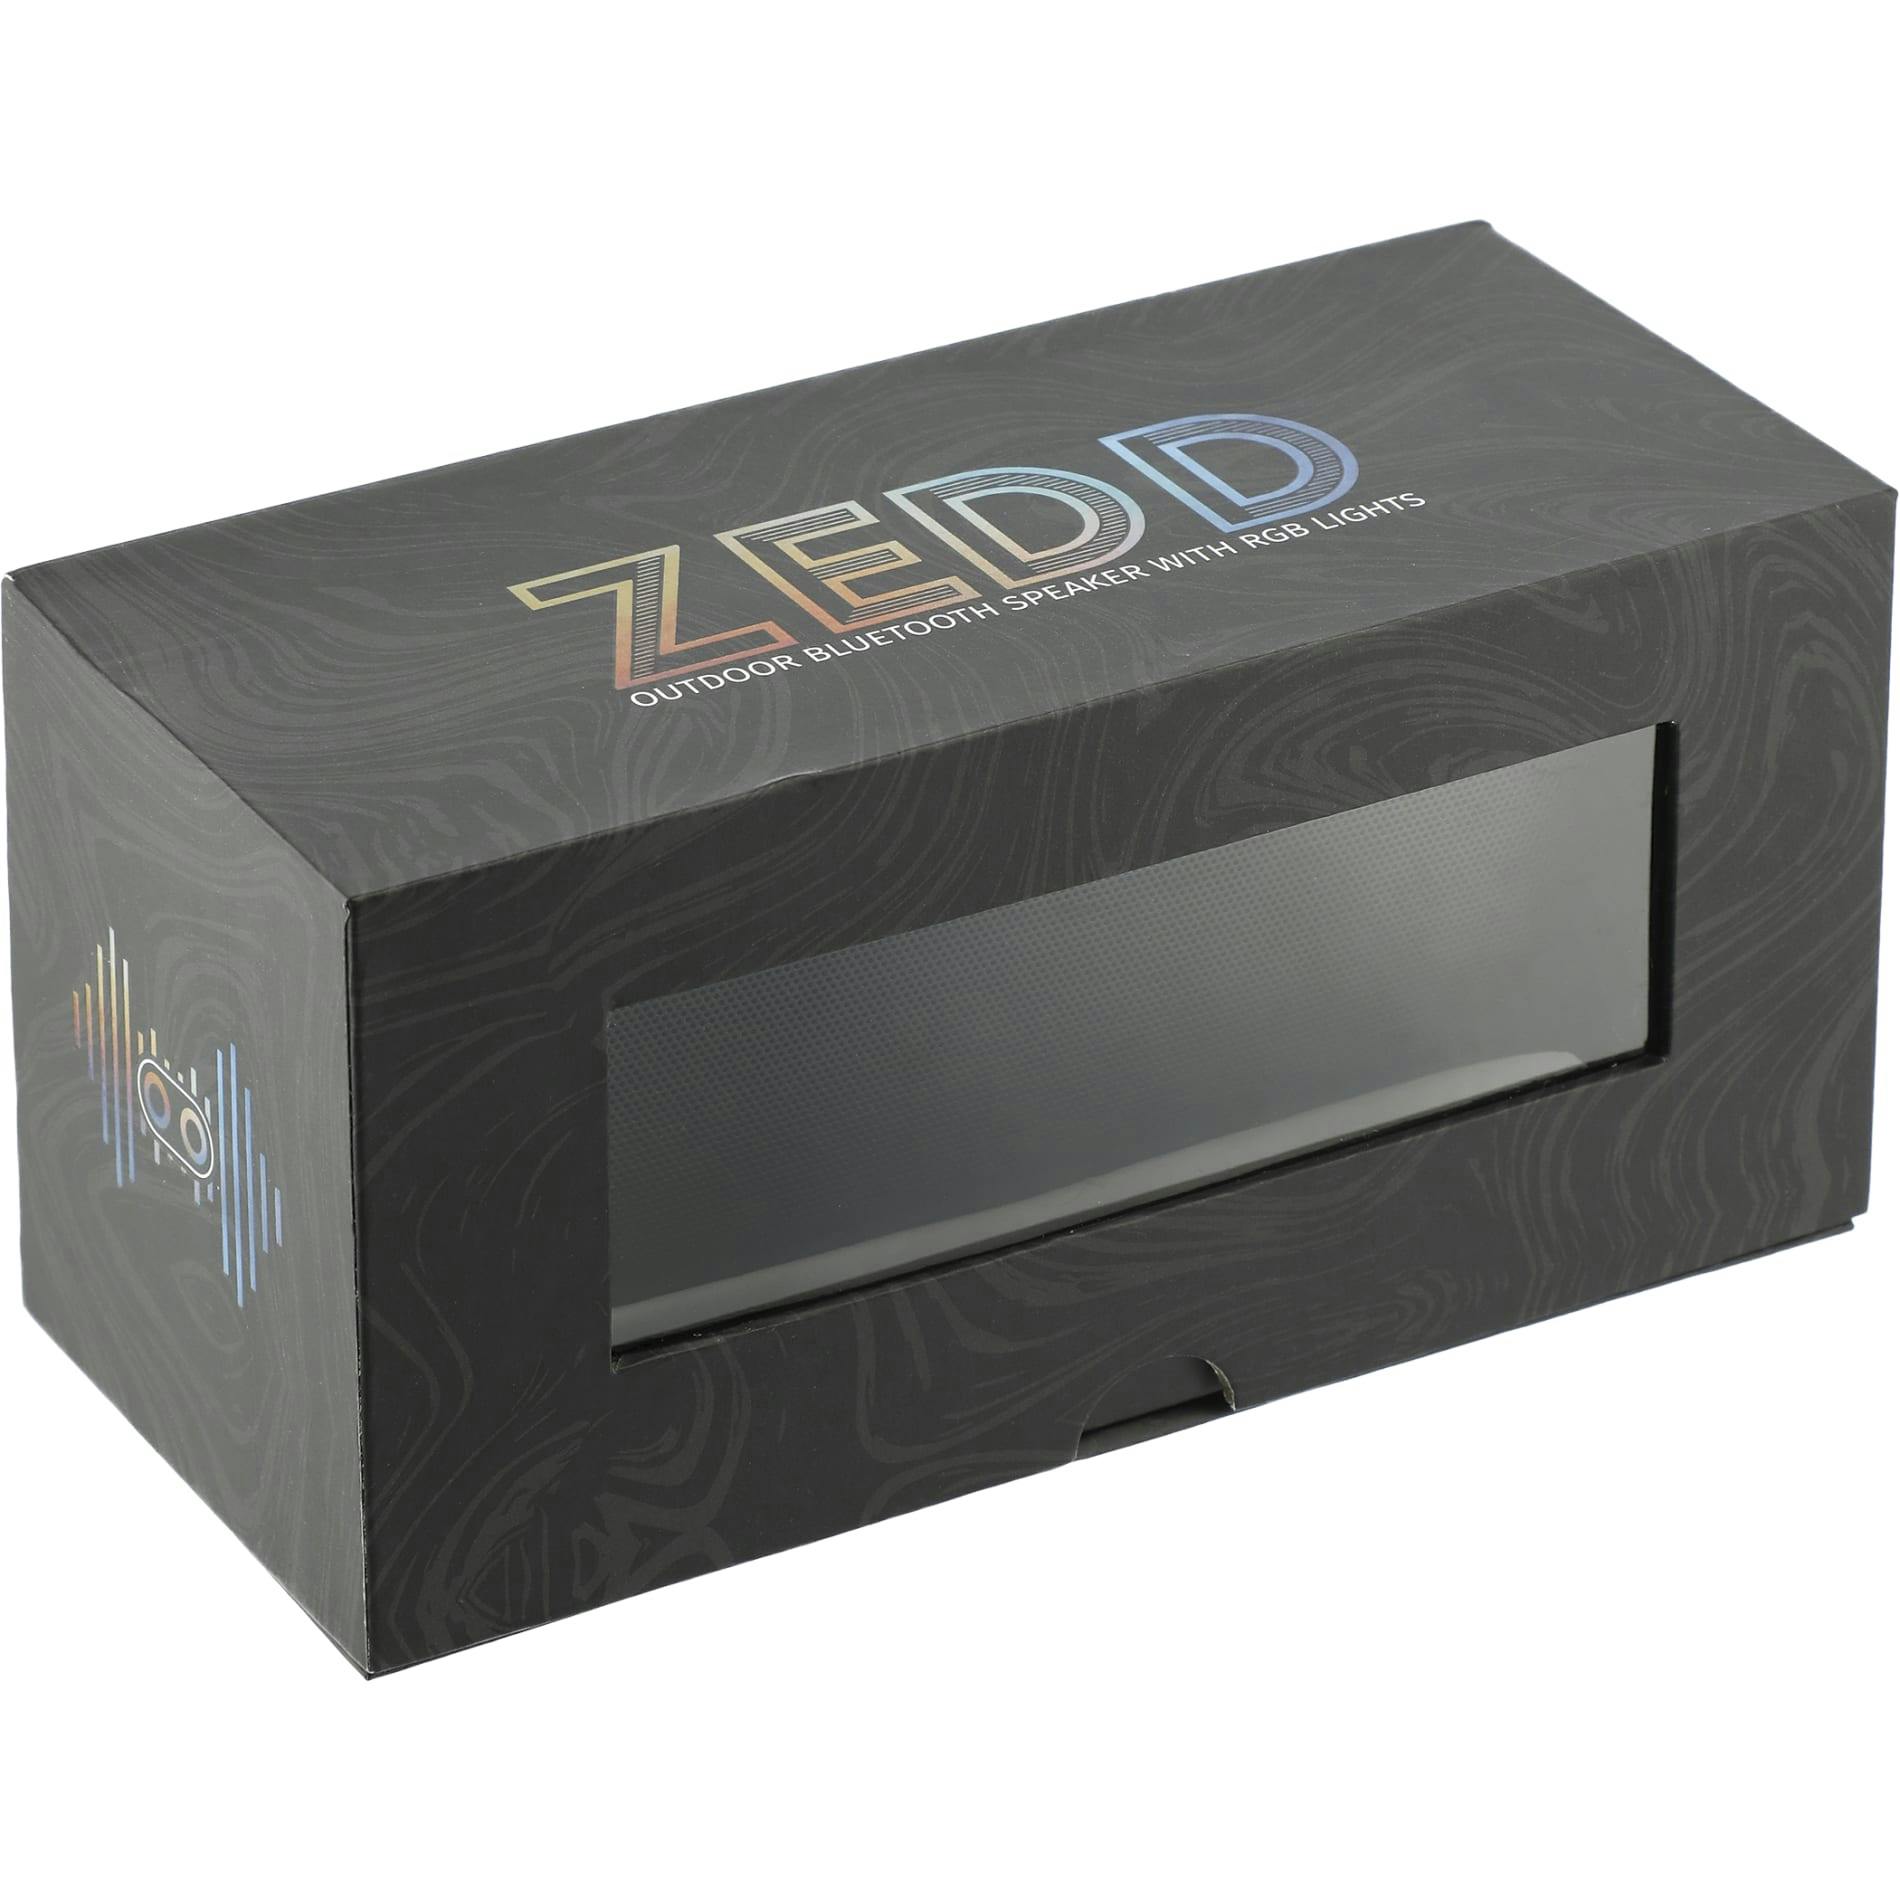 Zedd Outdoor Speaker with RGB Lights - additional Image 6